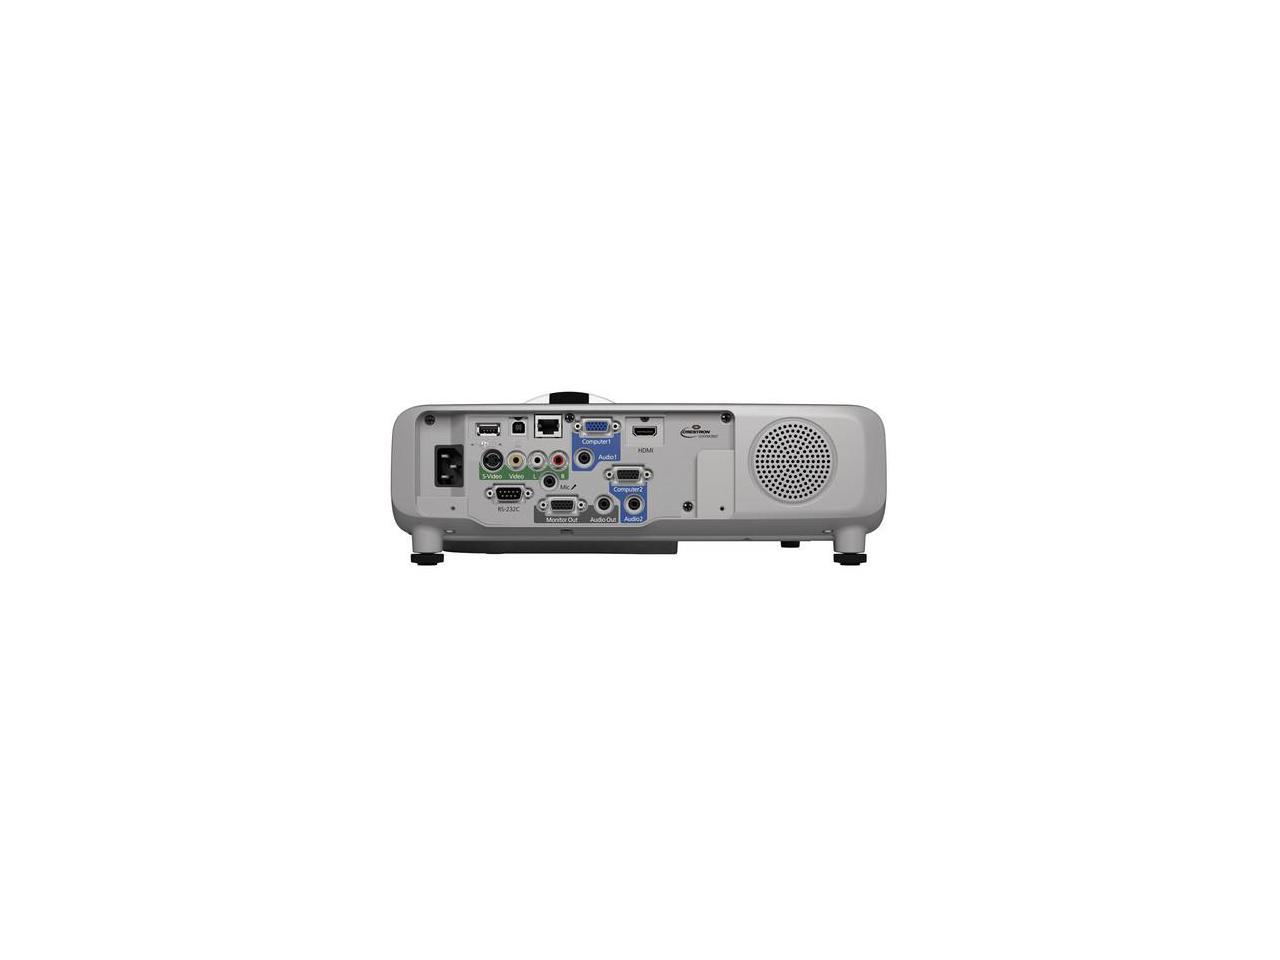 Epson PowerLite 520 XGA 3LCD Short-throw Projector 2700 lumens, V11H674020